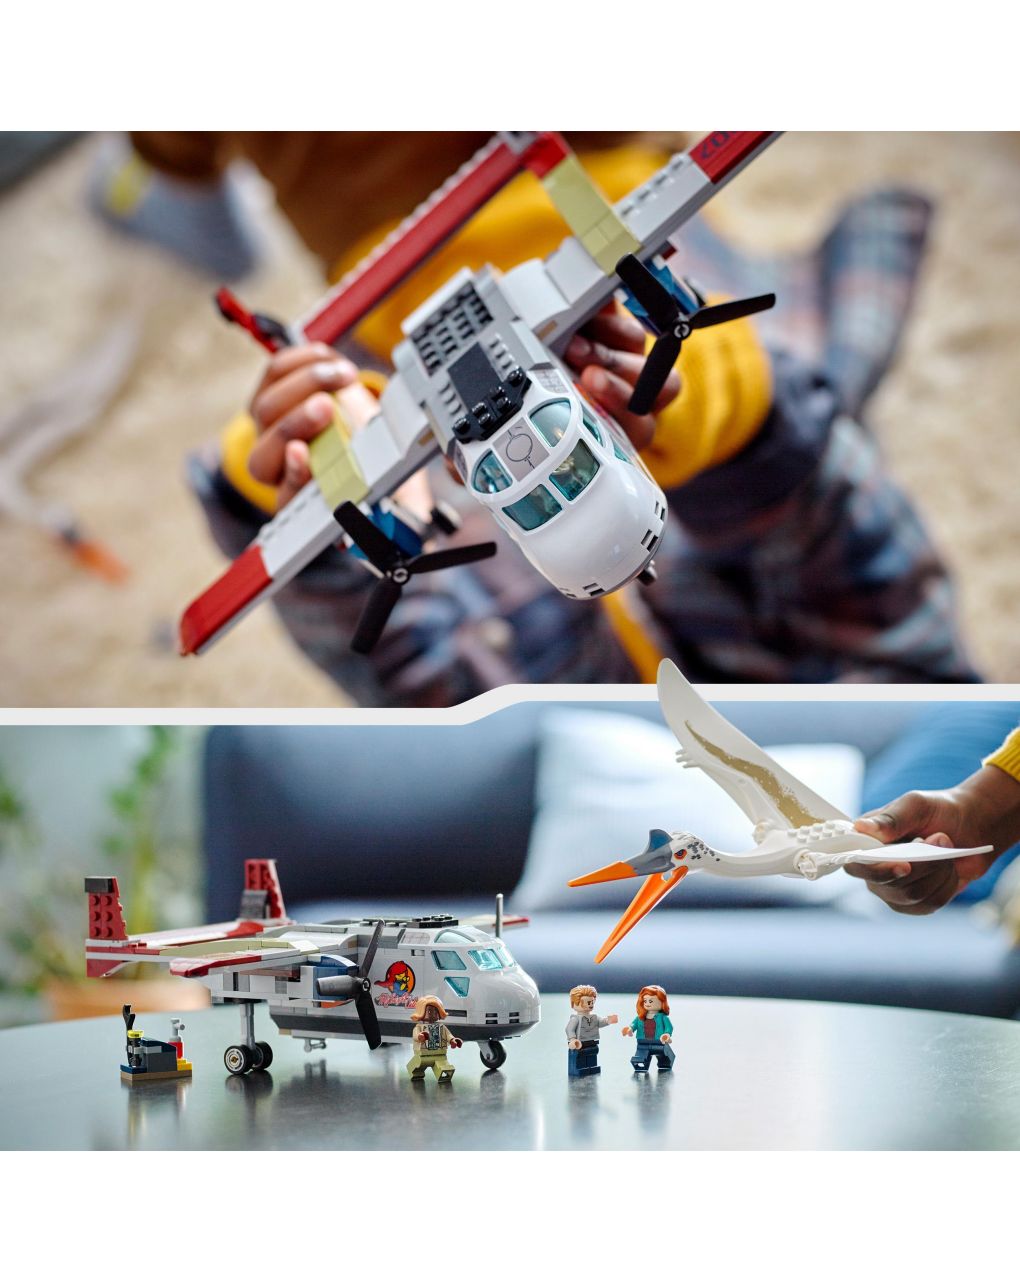 Quetzalcoatlus: emboscada aérea 76947 - mundo jurássico de lego - Lego Jurassic Park/W